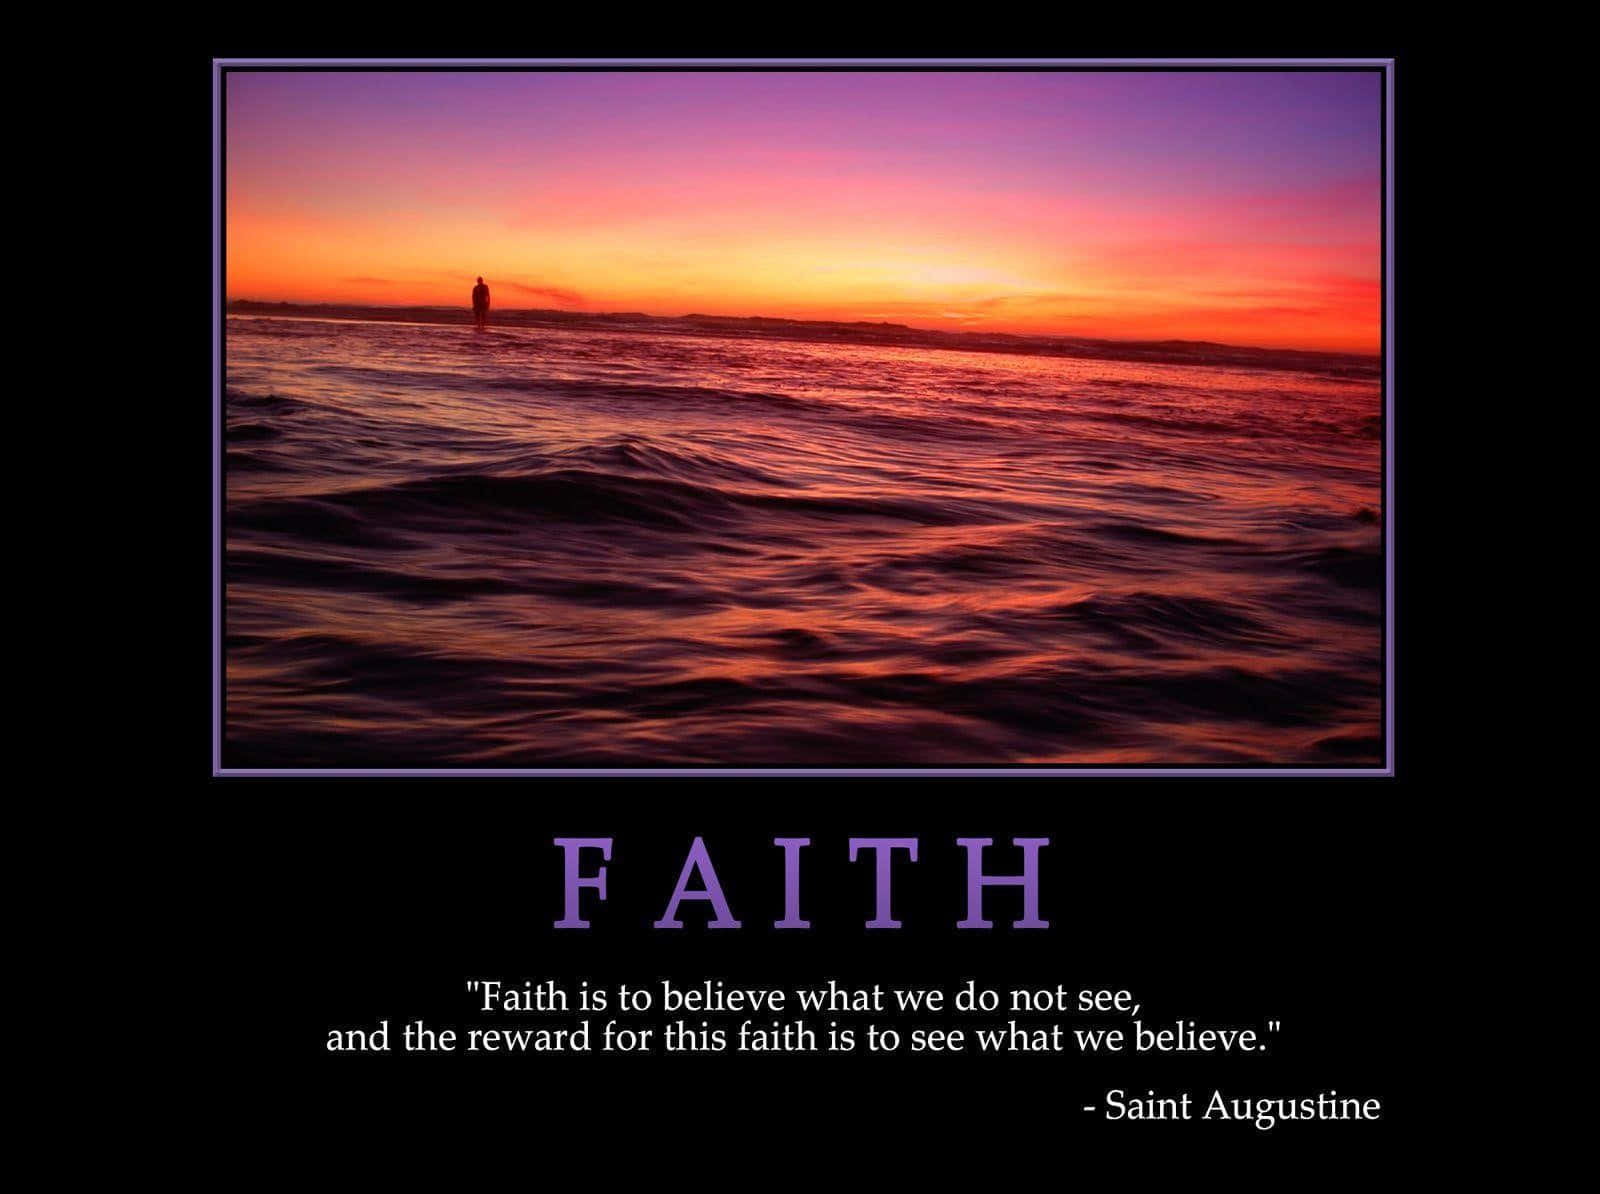 Believe in Faith